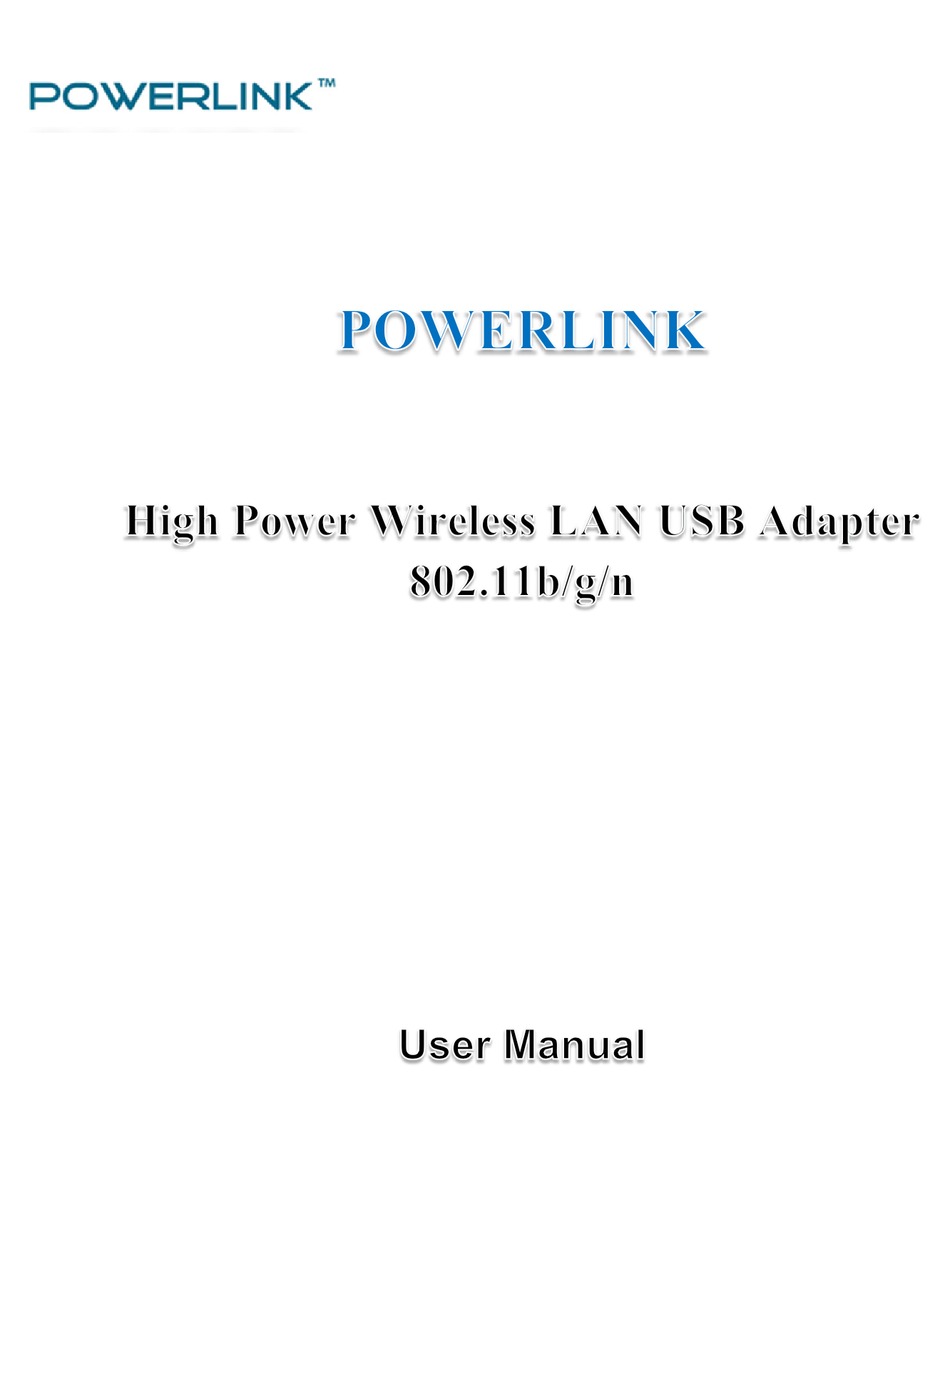 realtek 11n usb wireless lan utility windows xp